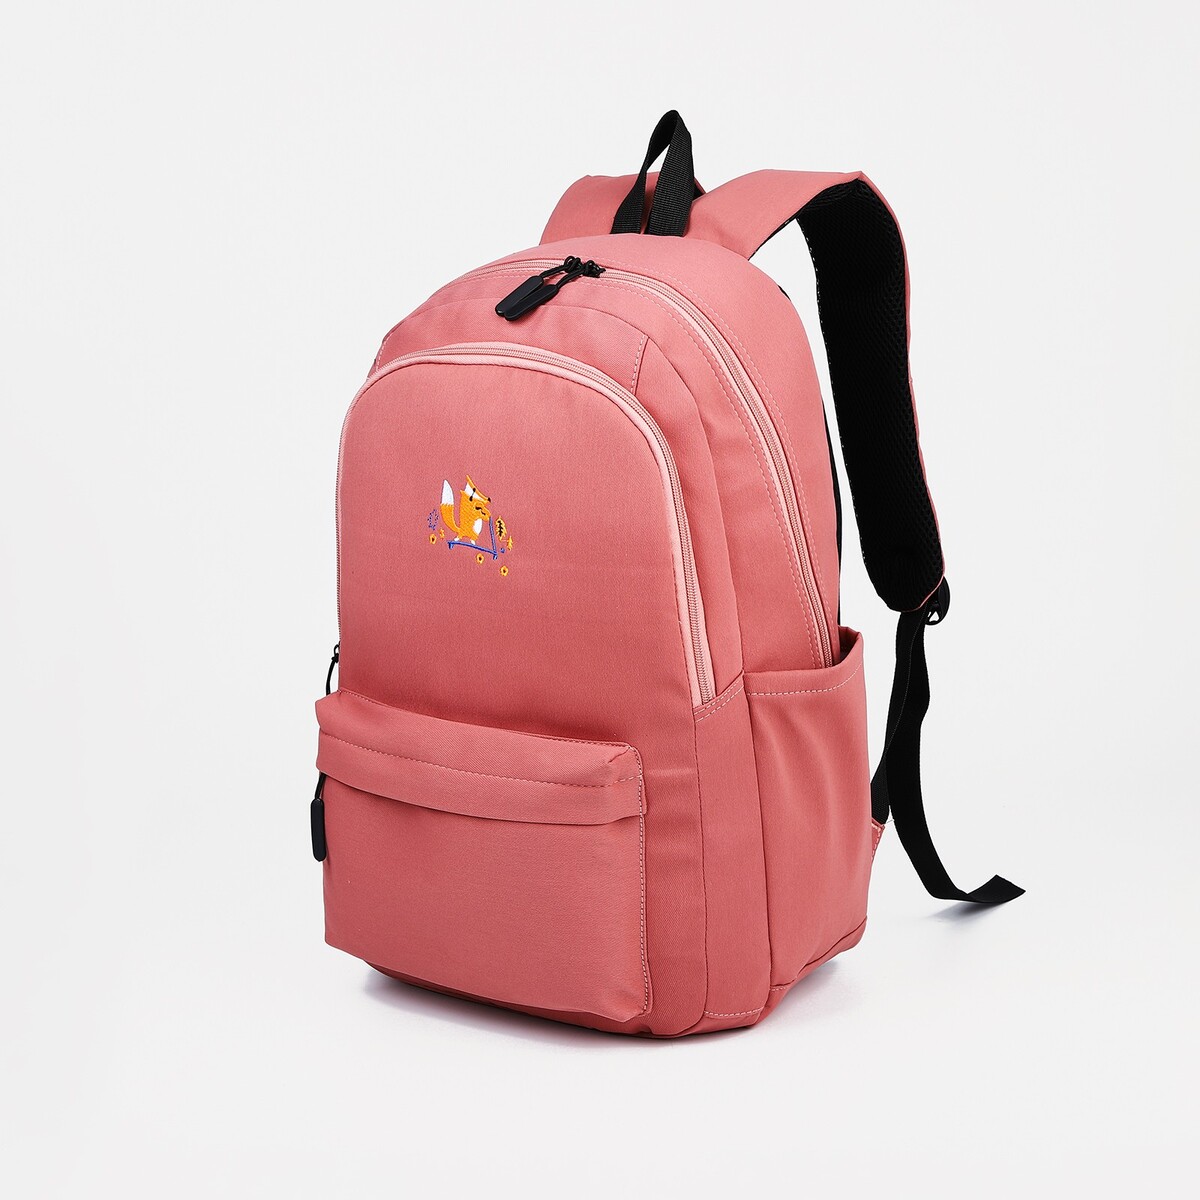 Рюкзак молодежный из текстиля, 2 отдела на молниях, 3 кармана, цвет розовый рюкзак школьный из текстиля на молнии 2 отдела 3 кармана розовый